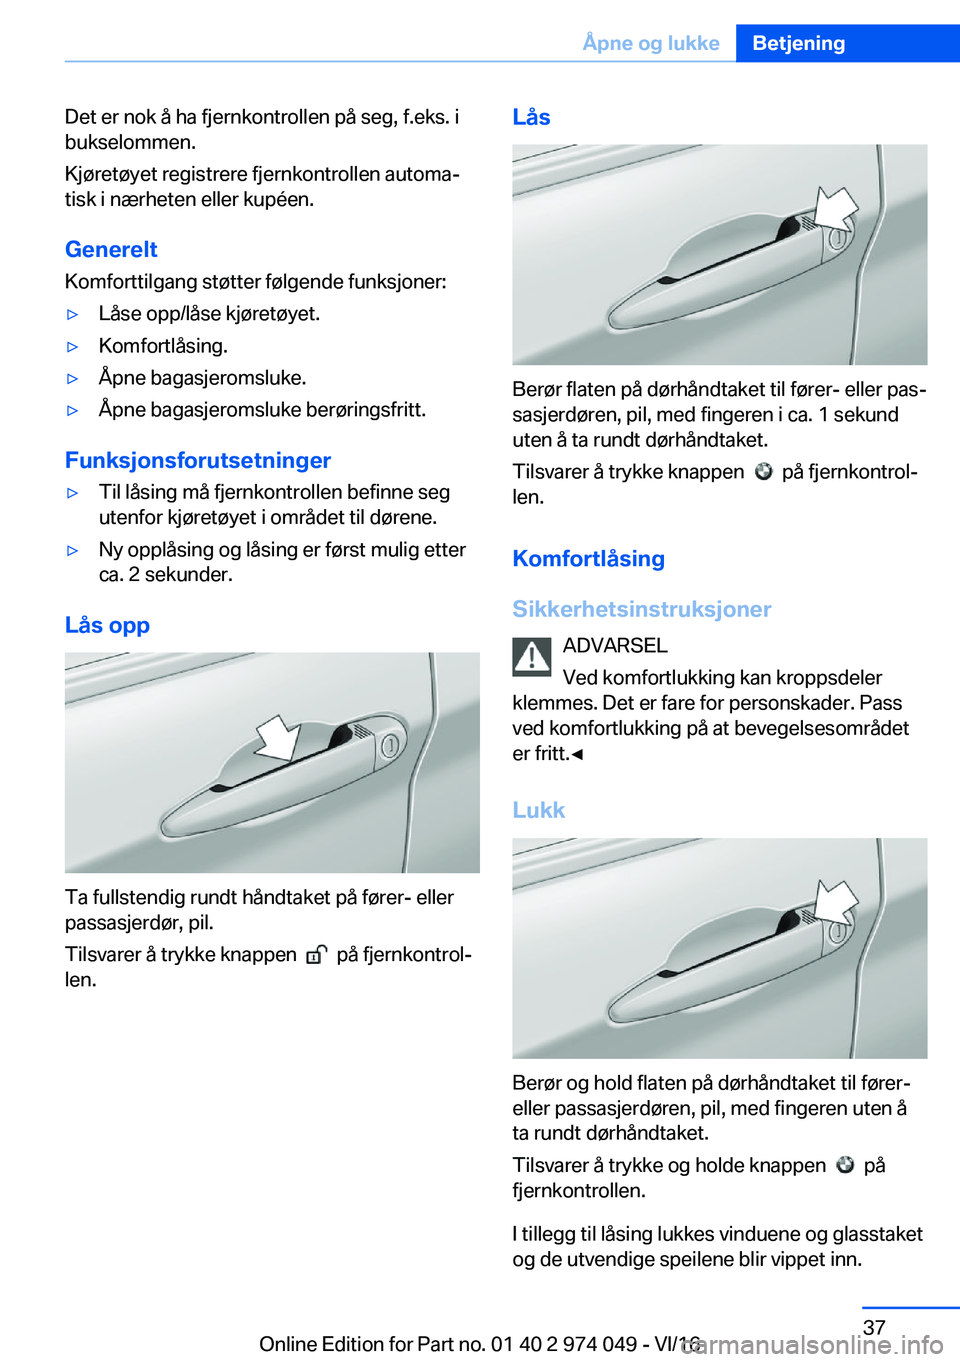 BMW M3 2017  Instructieboekjes (in Dutch) �D�e�t� �e�r� �n�o�k� �å� �h�a� �f�j�e�r�n�k�o�n�t�r�o�l�l�e�n� �p�å� �s�e�g�,� �f�.�e�k�s�.� �i
�b�u�k�s�e�l�o�m�m�e�n�.
�K�j�